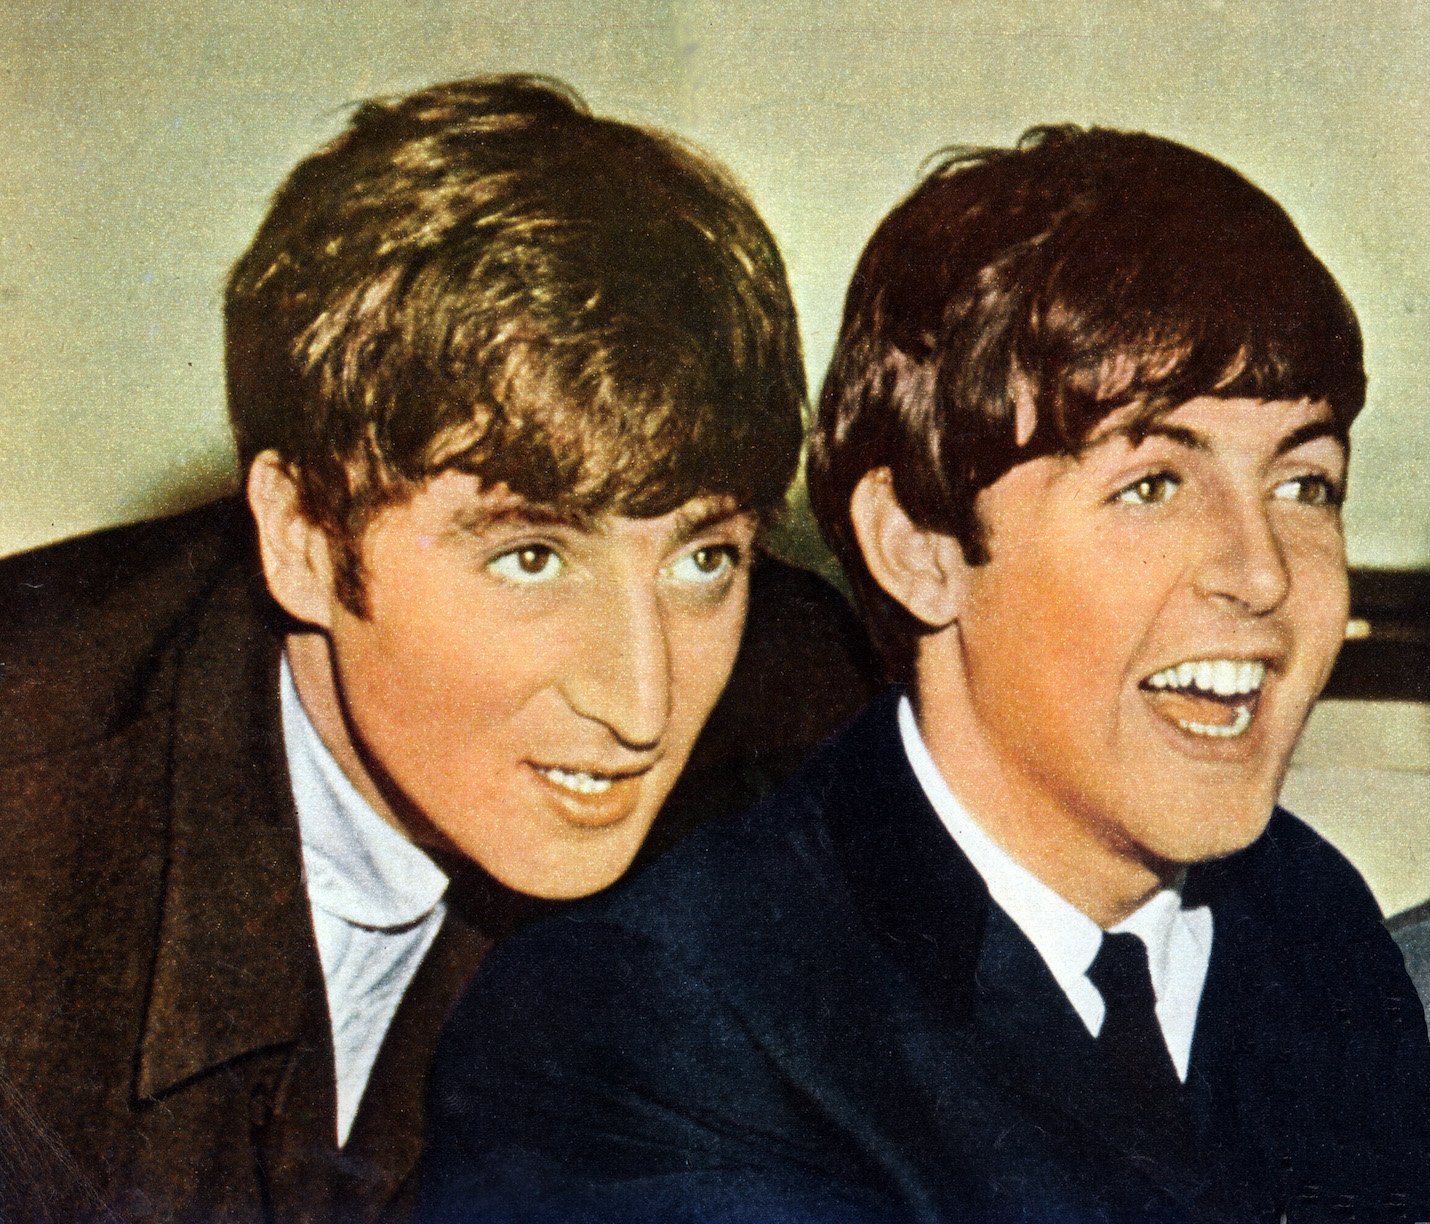 John Lennon and Paul McCartney from The Beatles in 1963